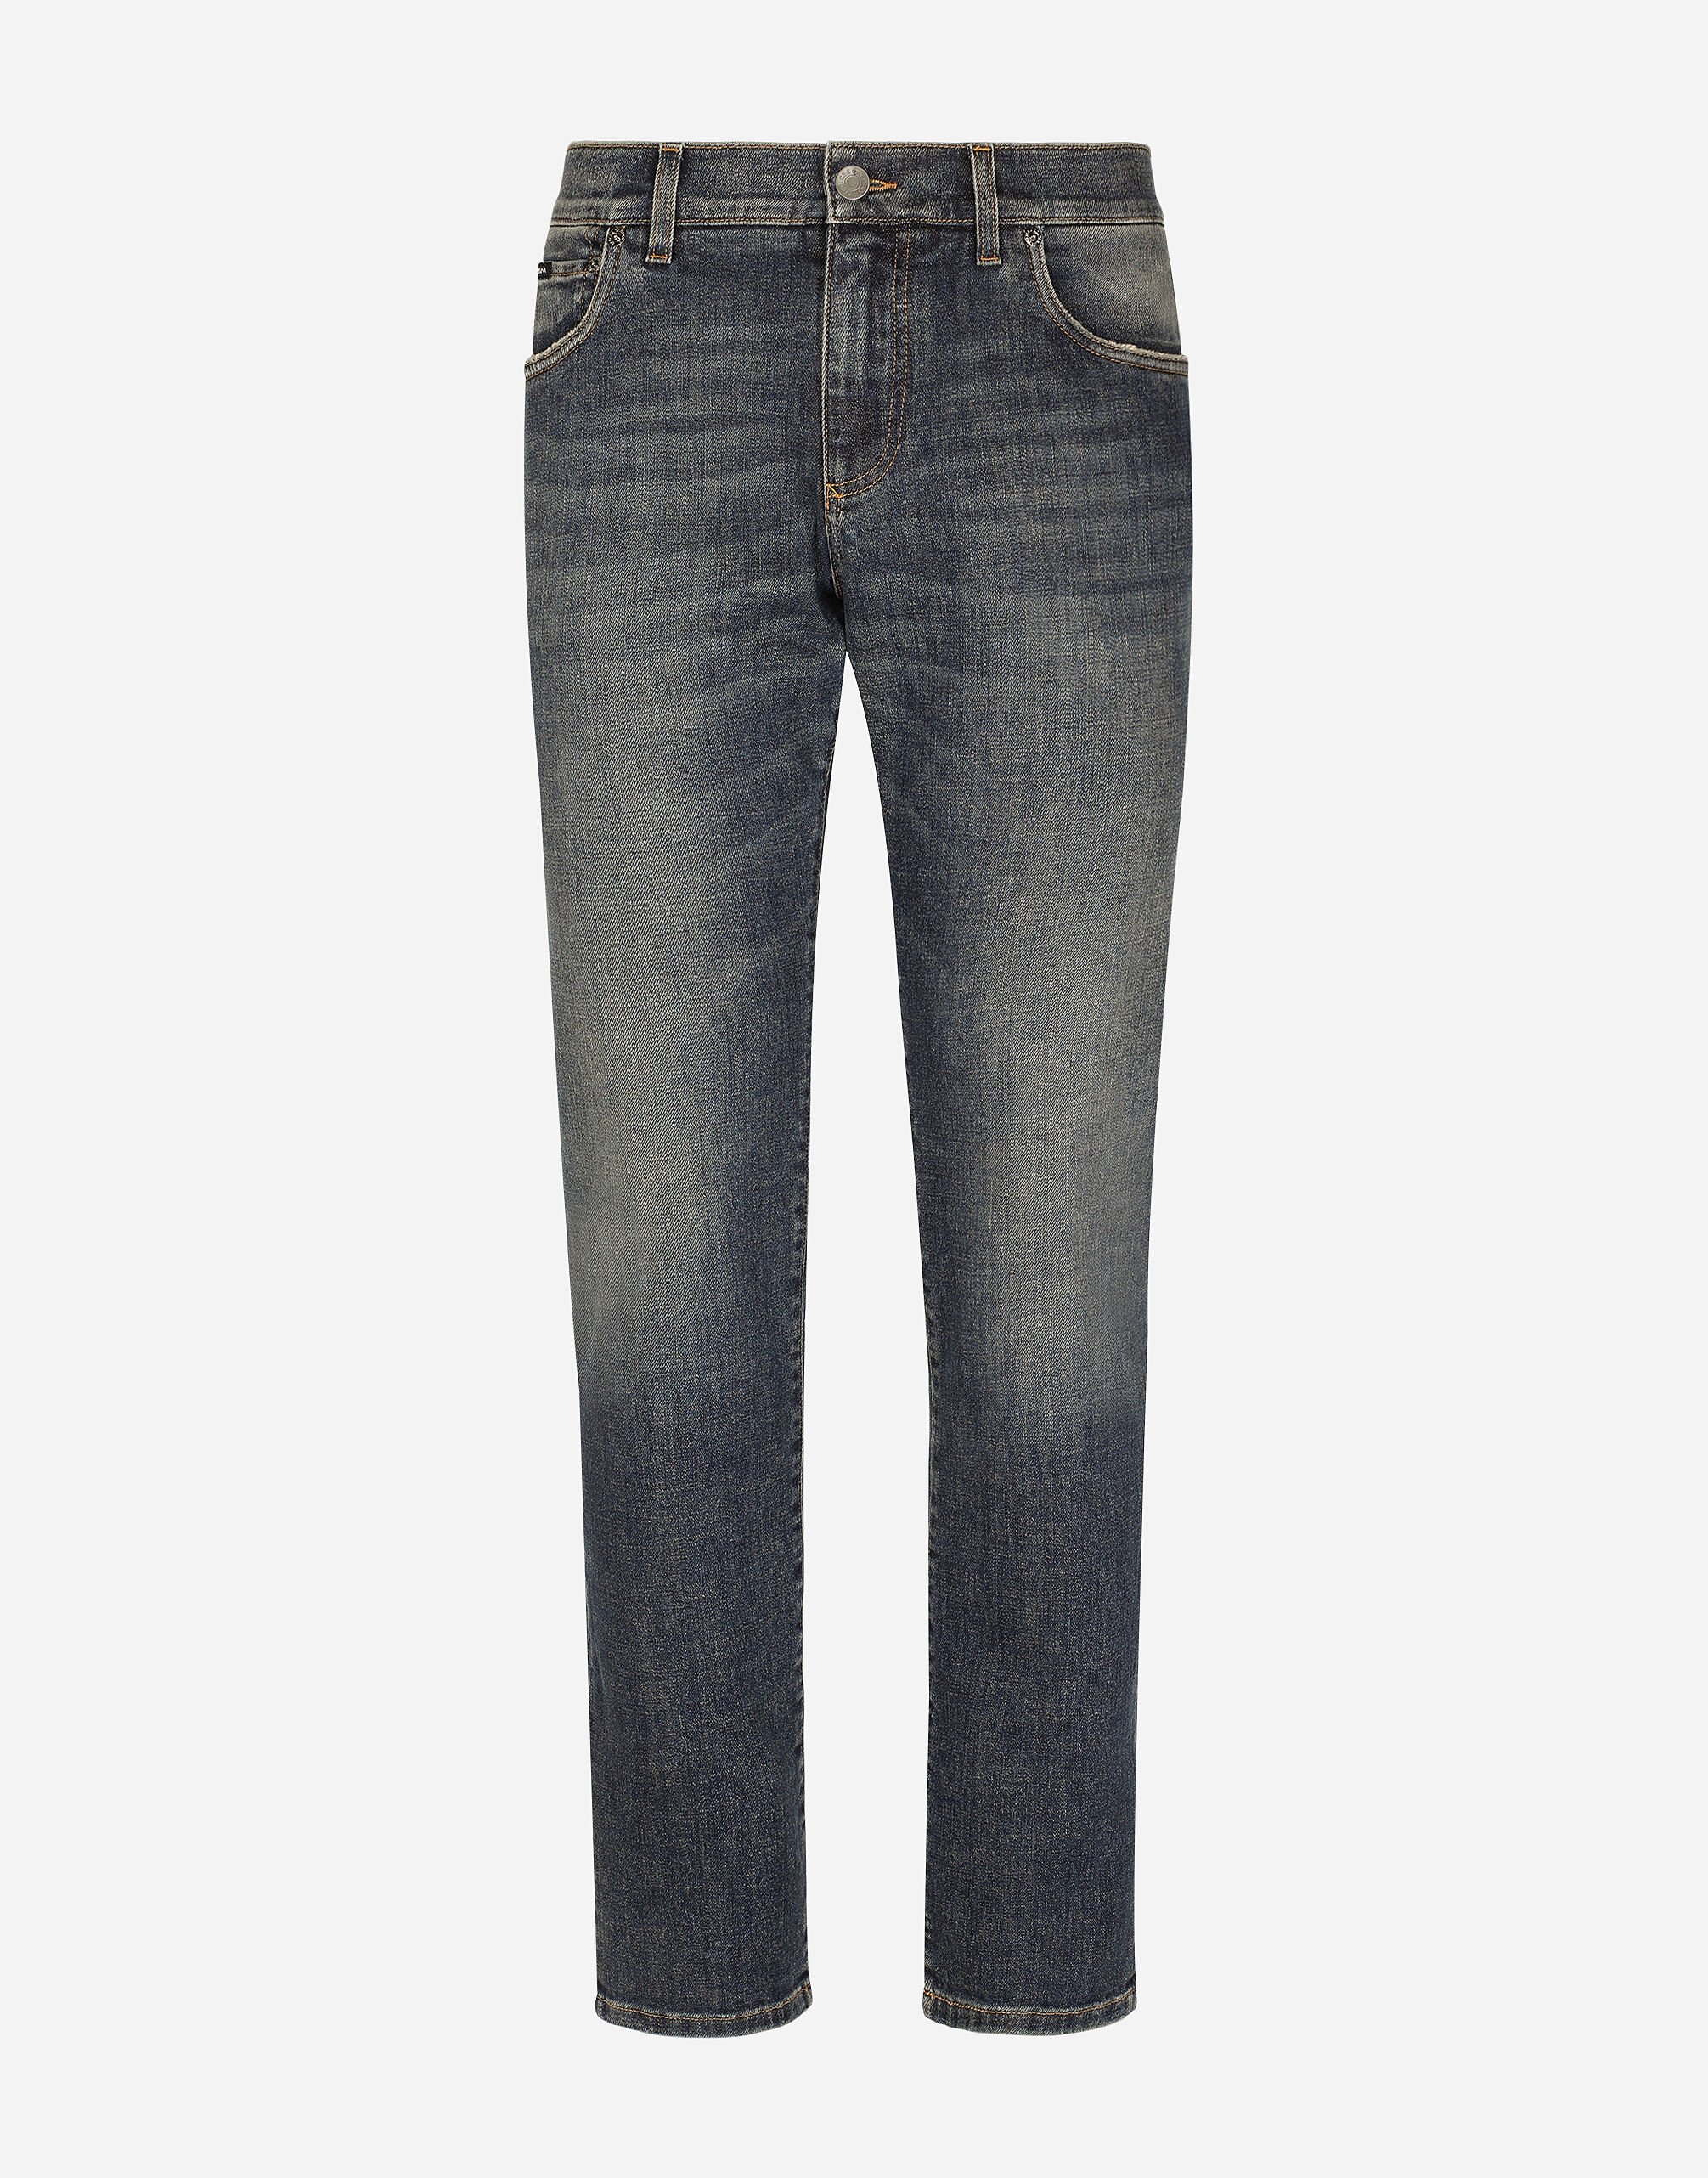 Dolce & Gabbana Light blue wash skinny stretch jeans Black VG4390VP187